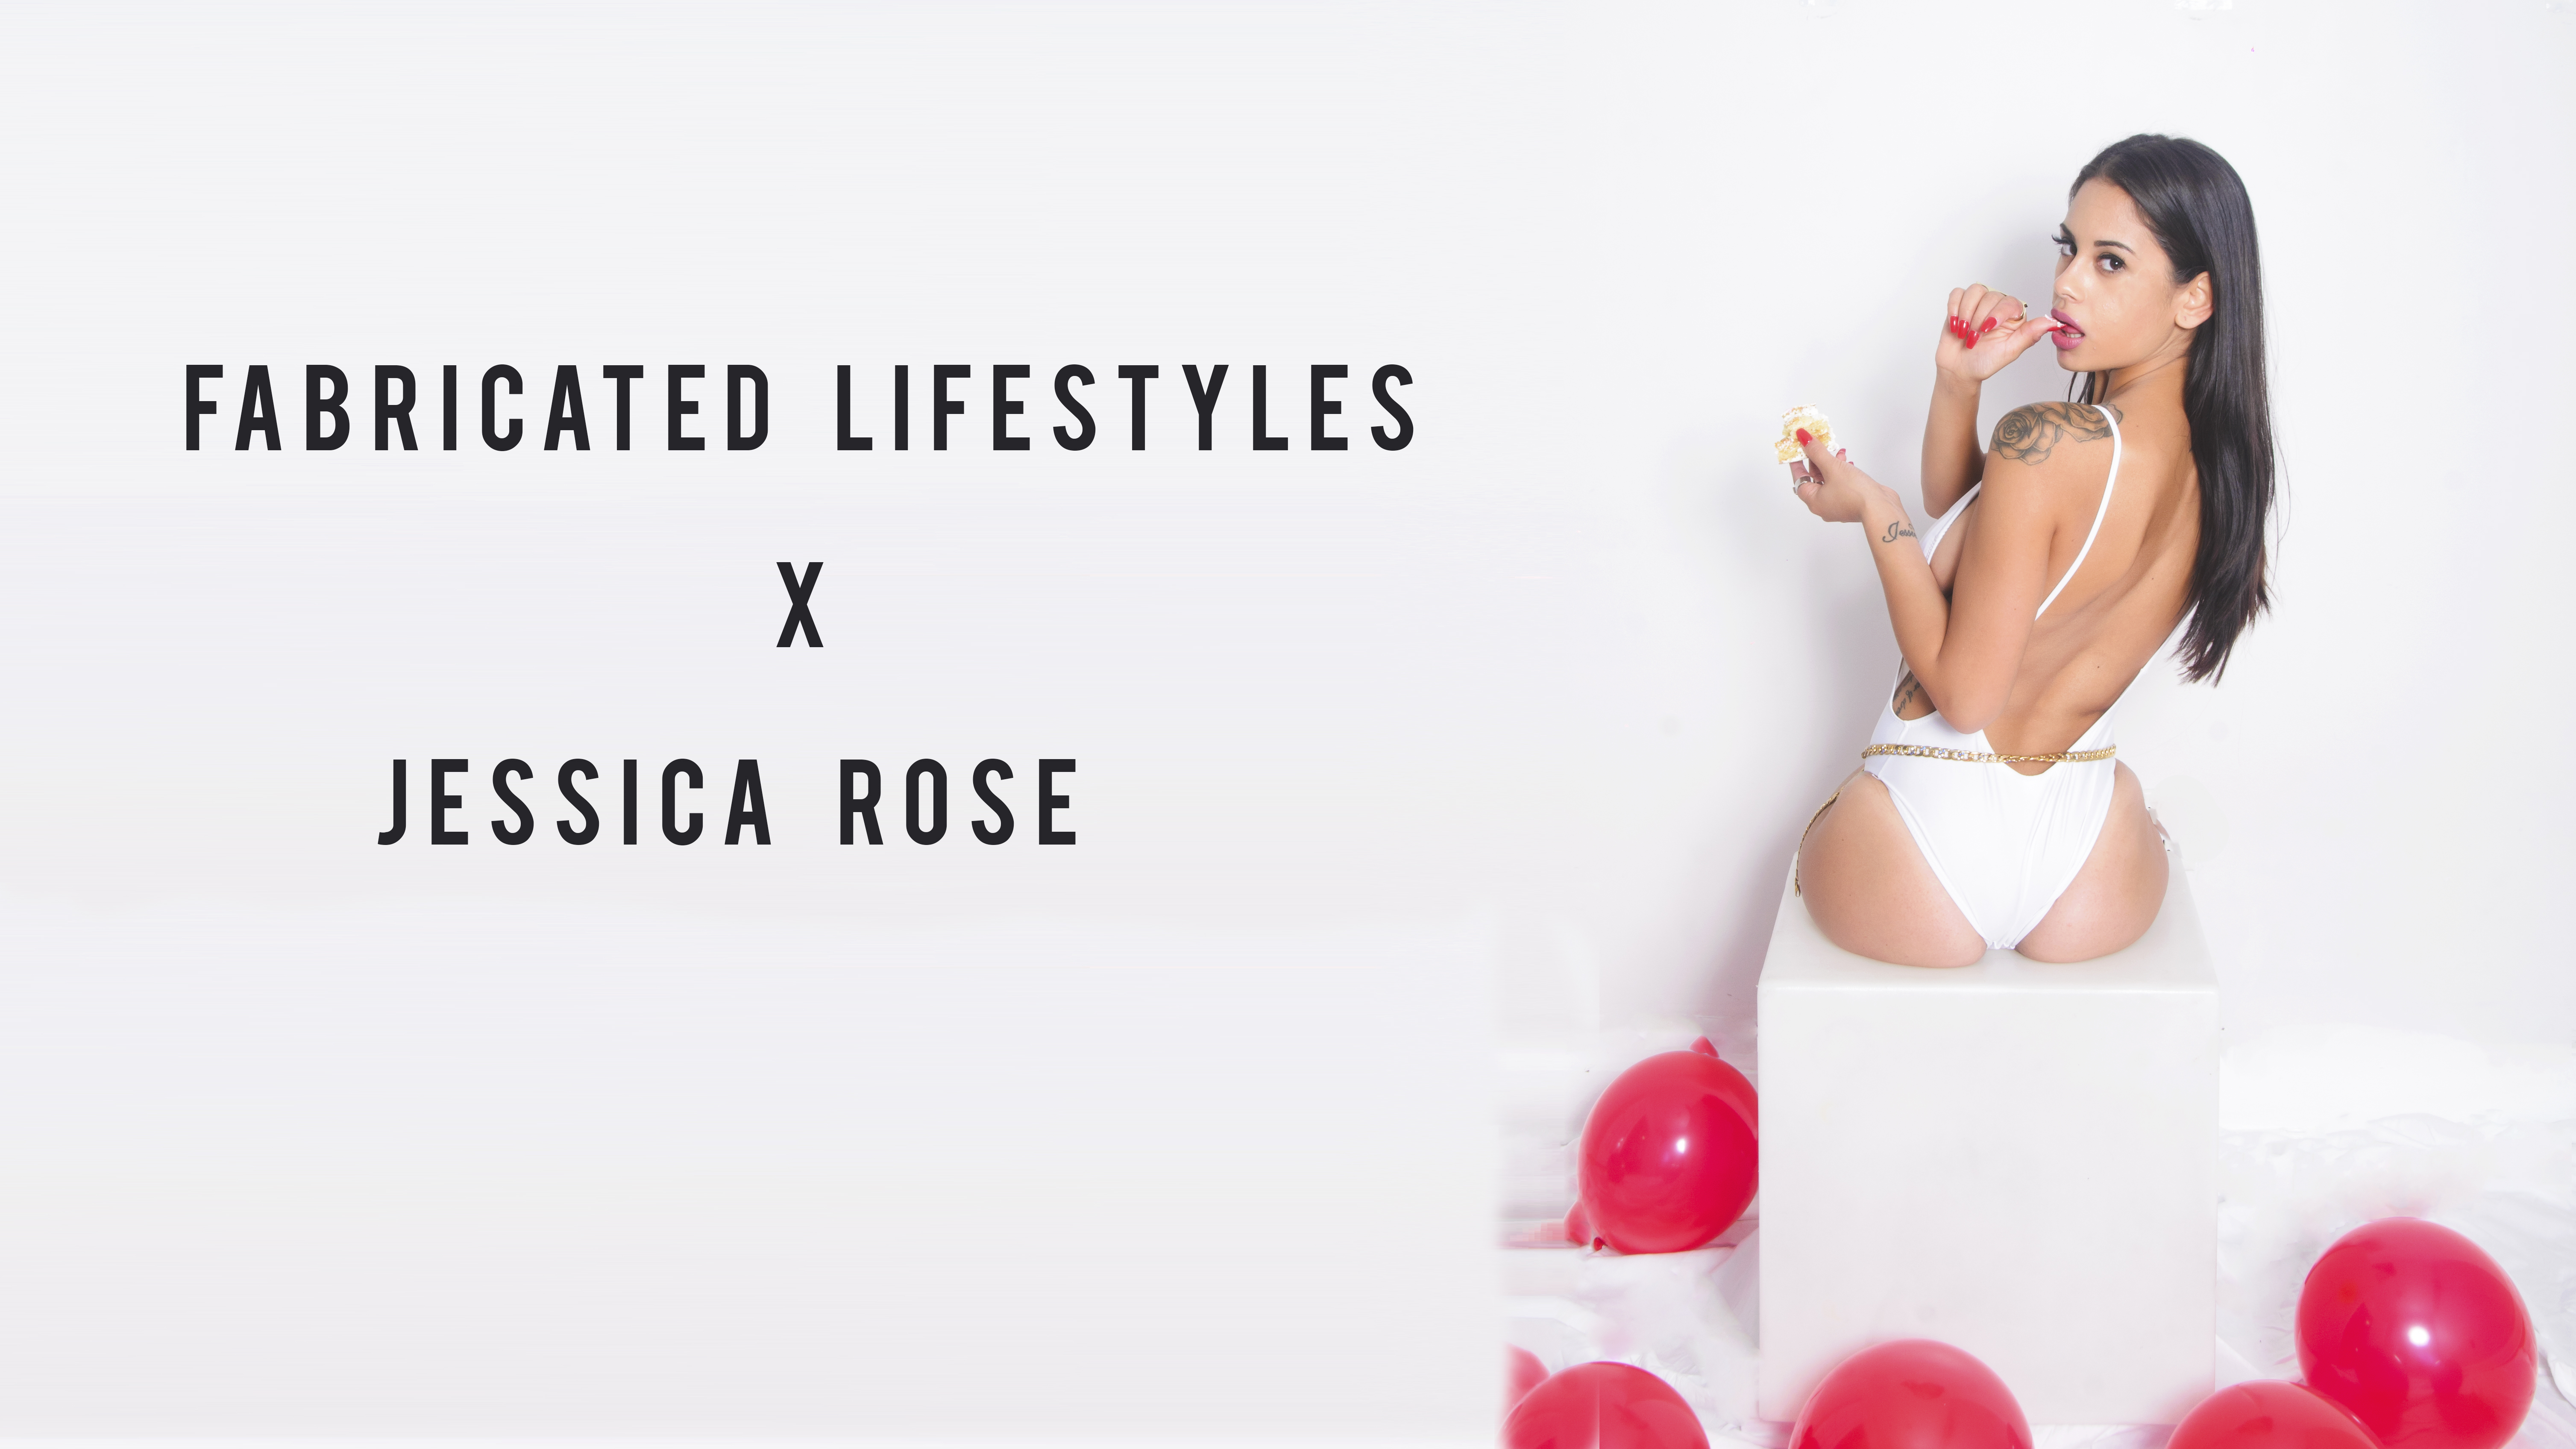 Fabricated Lifestyles X Jessica Rose